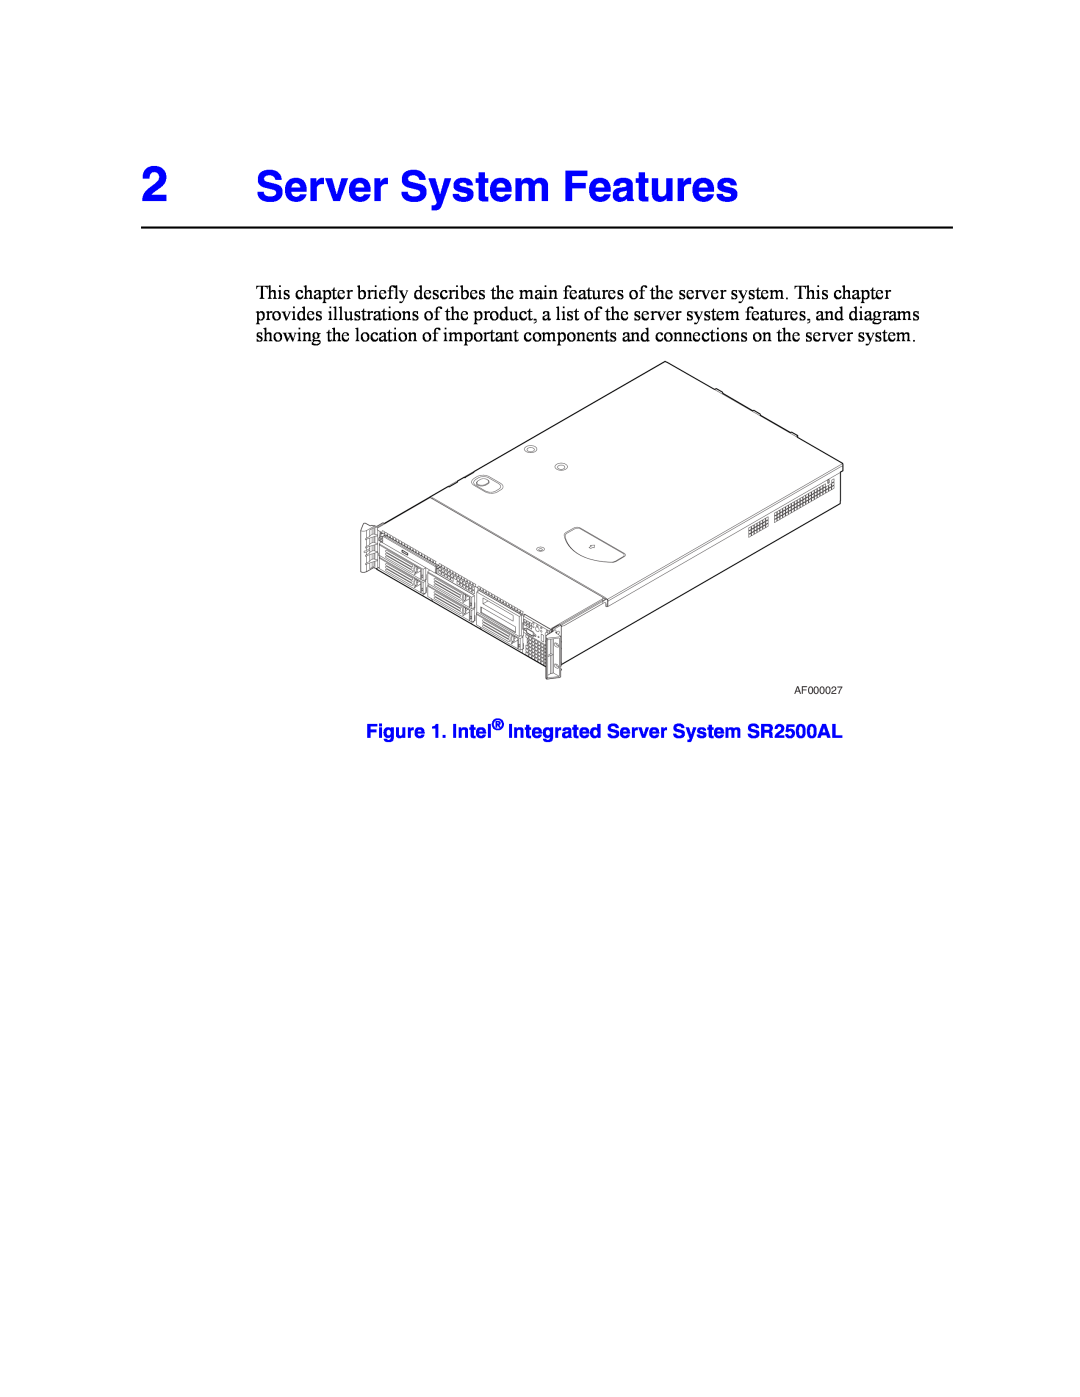 Intel manual Server System Features, Intel Integrated Server System SR2500AL 